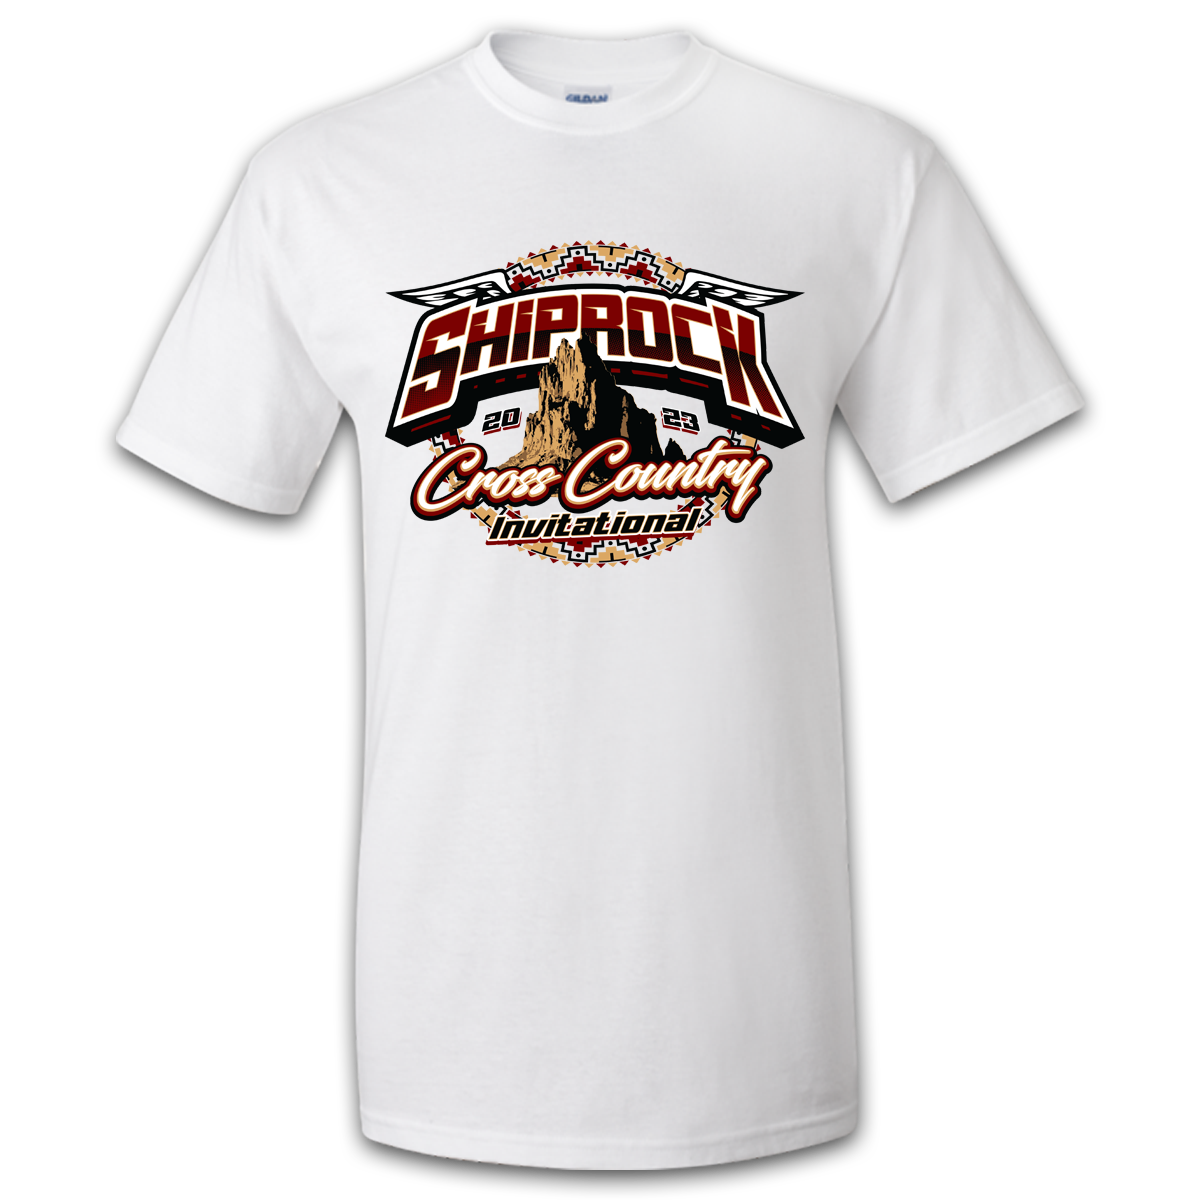 2023 Shipock Invitational Cross Country Tournament T-Shirt